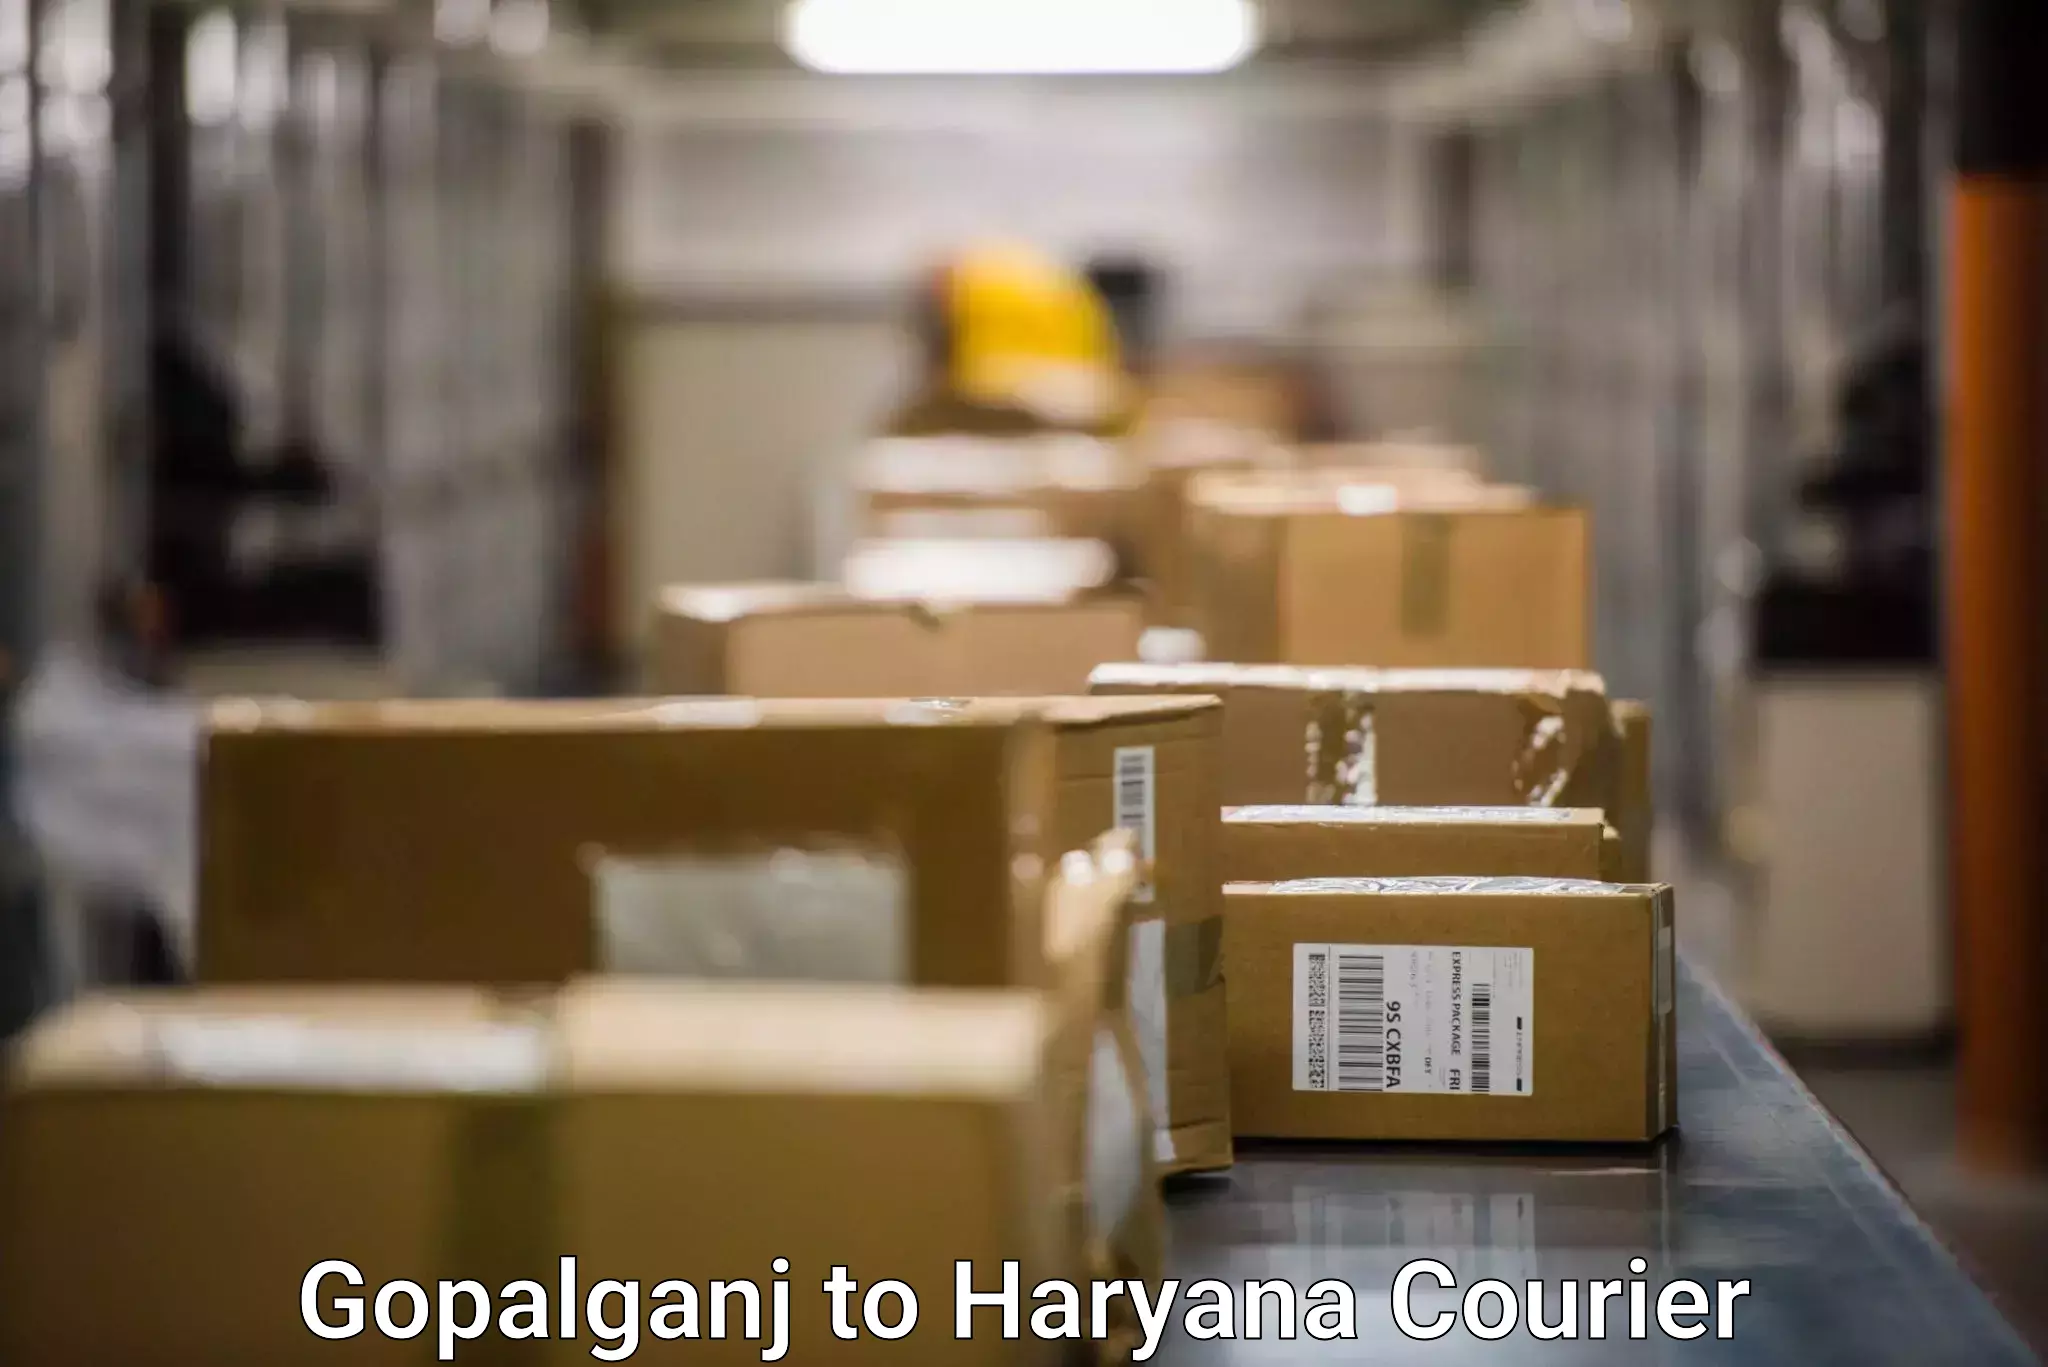 Courier service innovation Gopalganj to Haryana